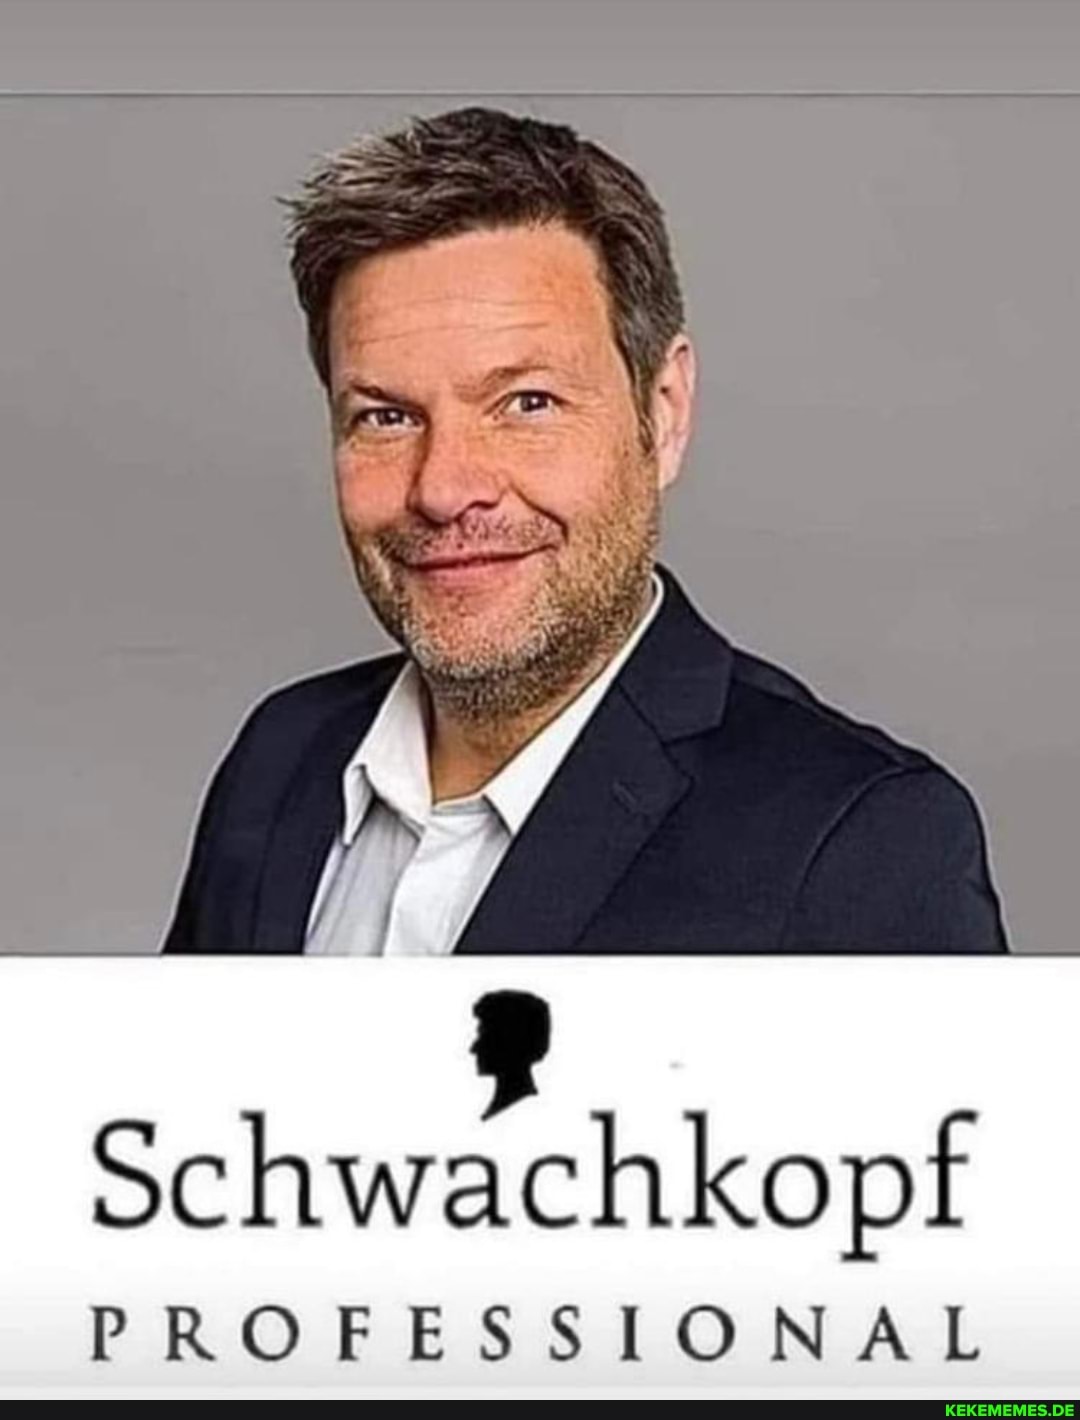 Schwechkopf PROFESS LON AL